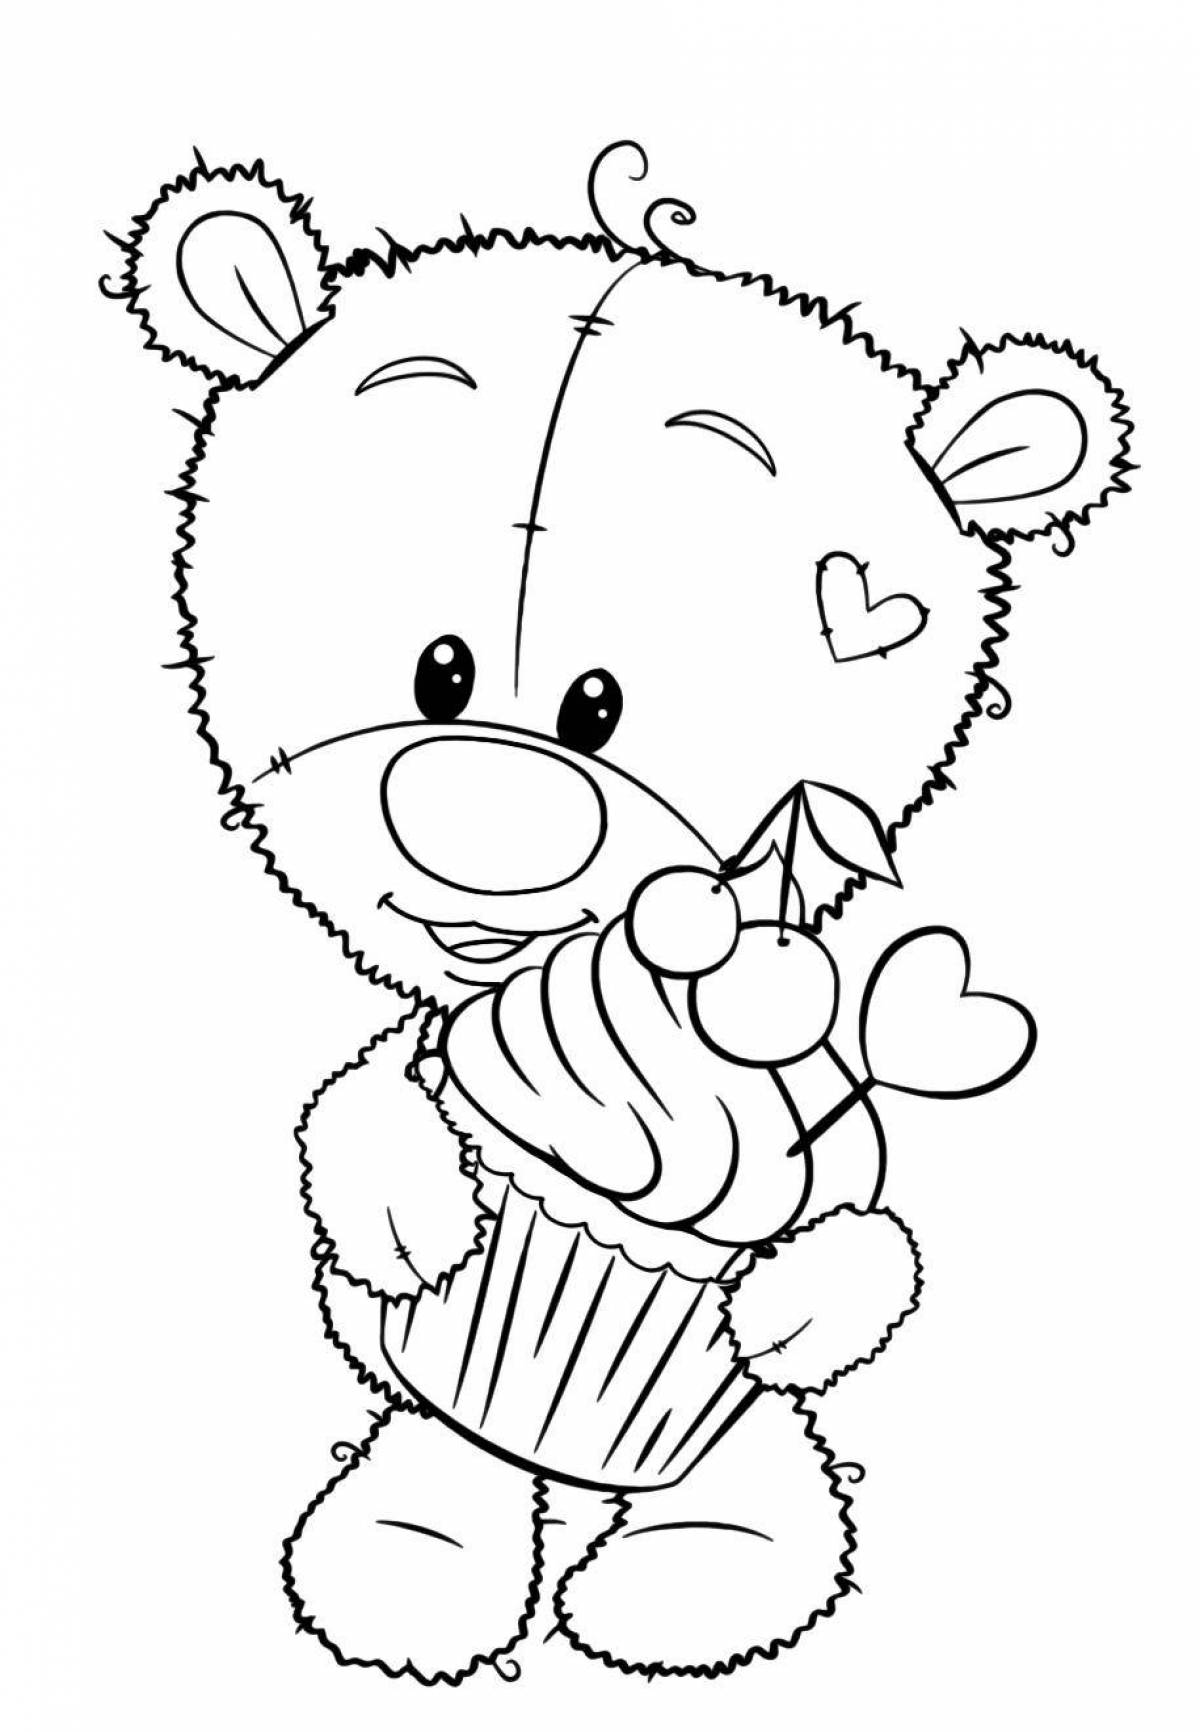 Fun teddy coloring book